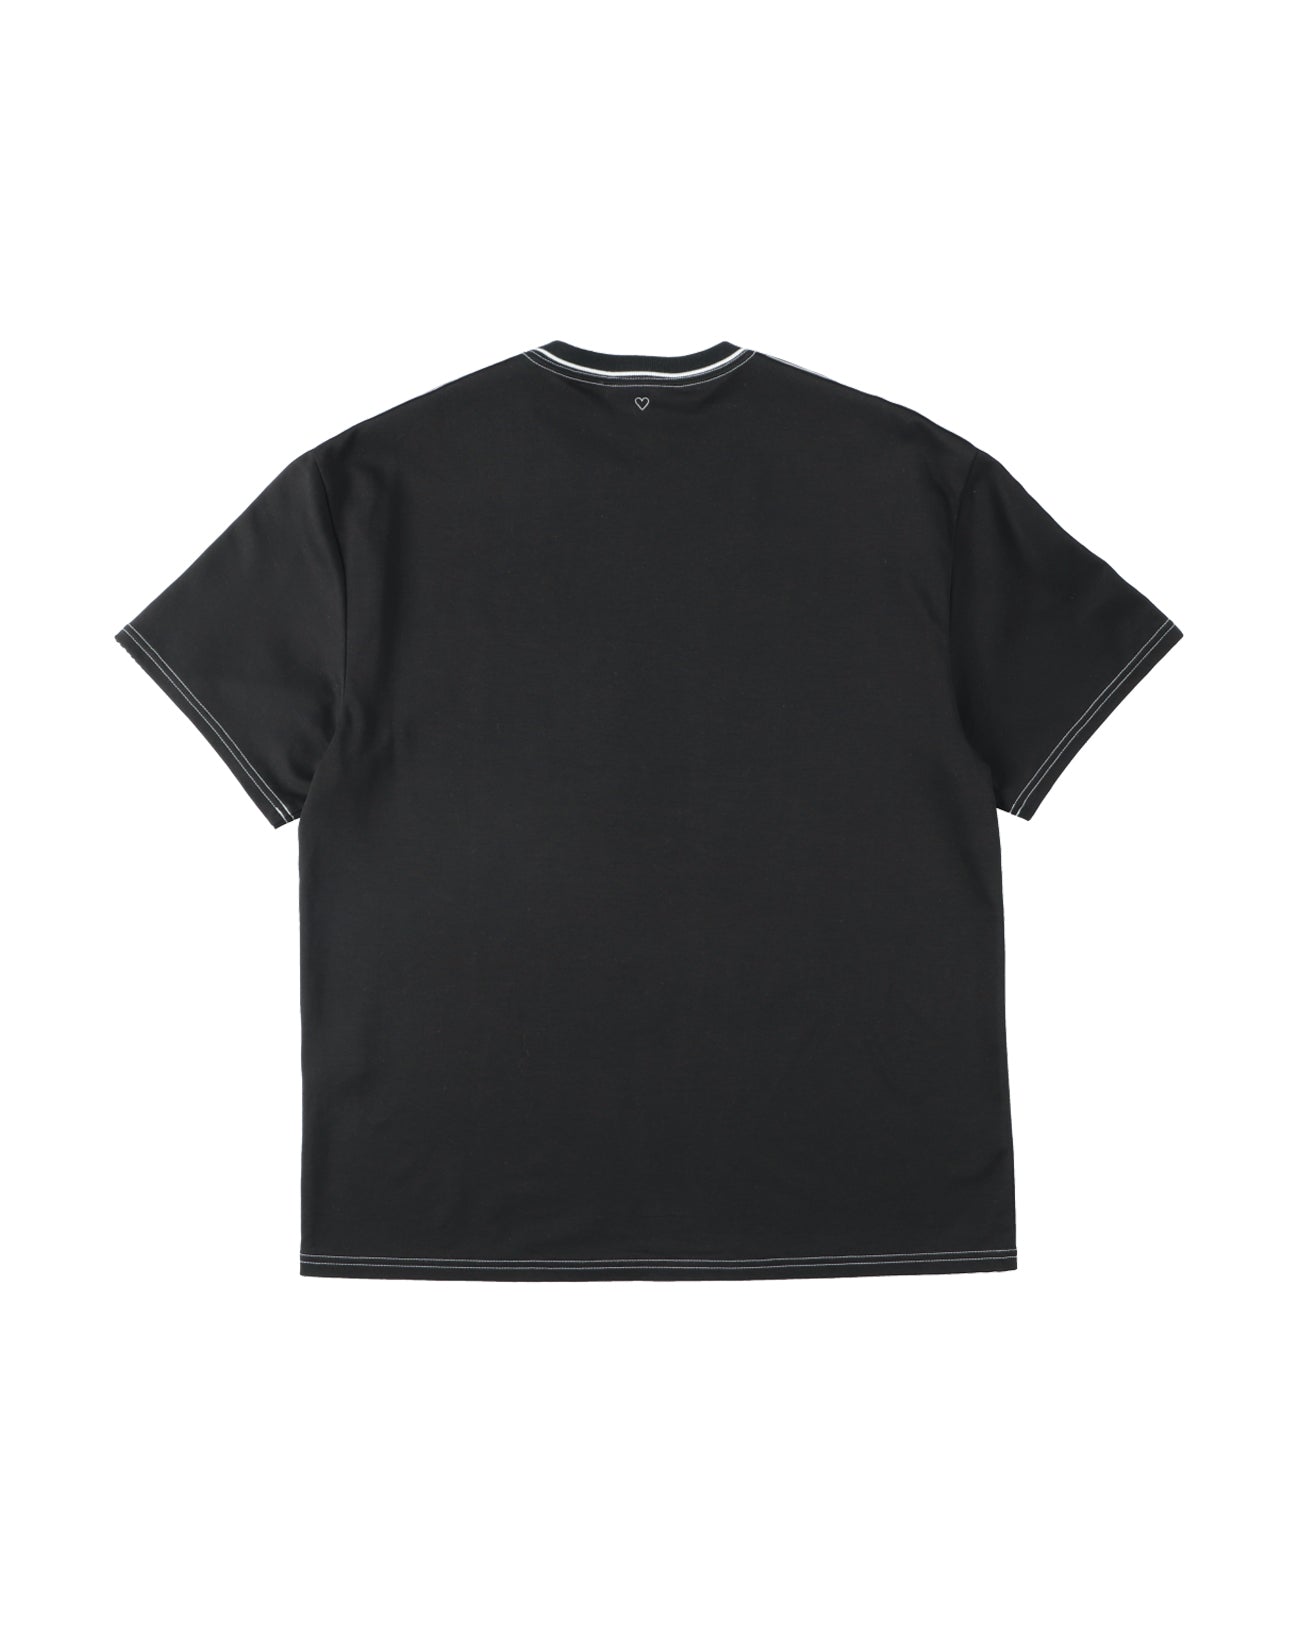 x UMBRO Uniform T-shirt - black